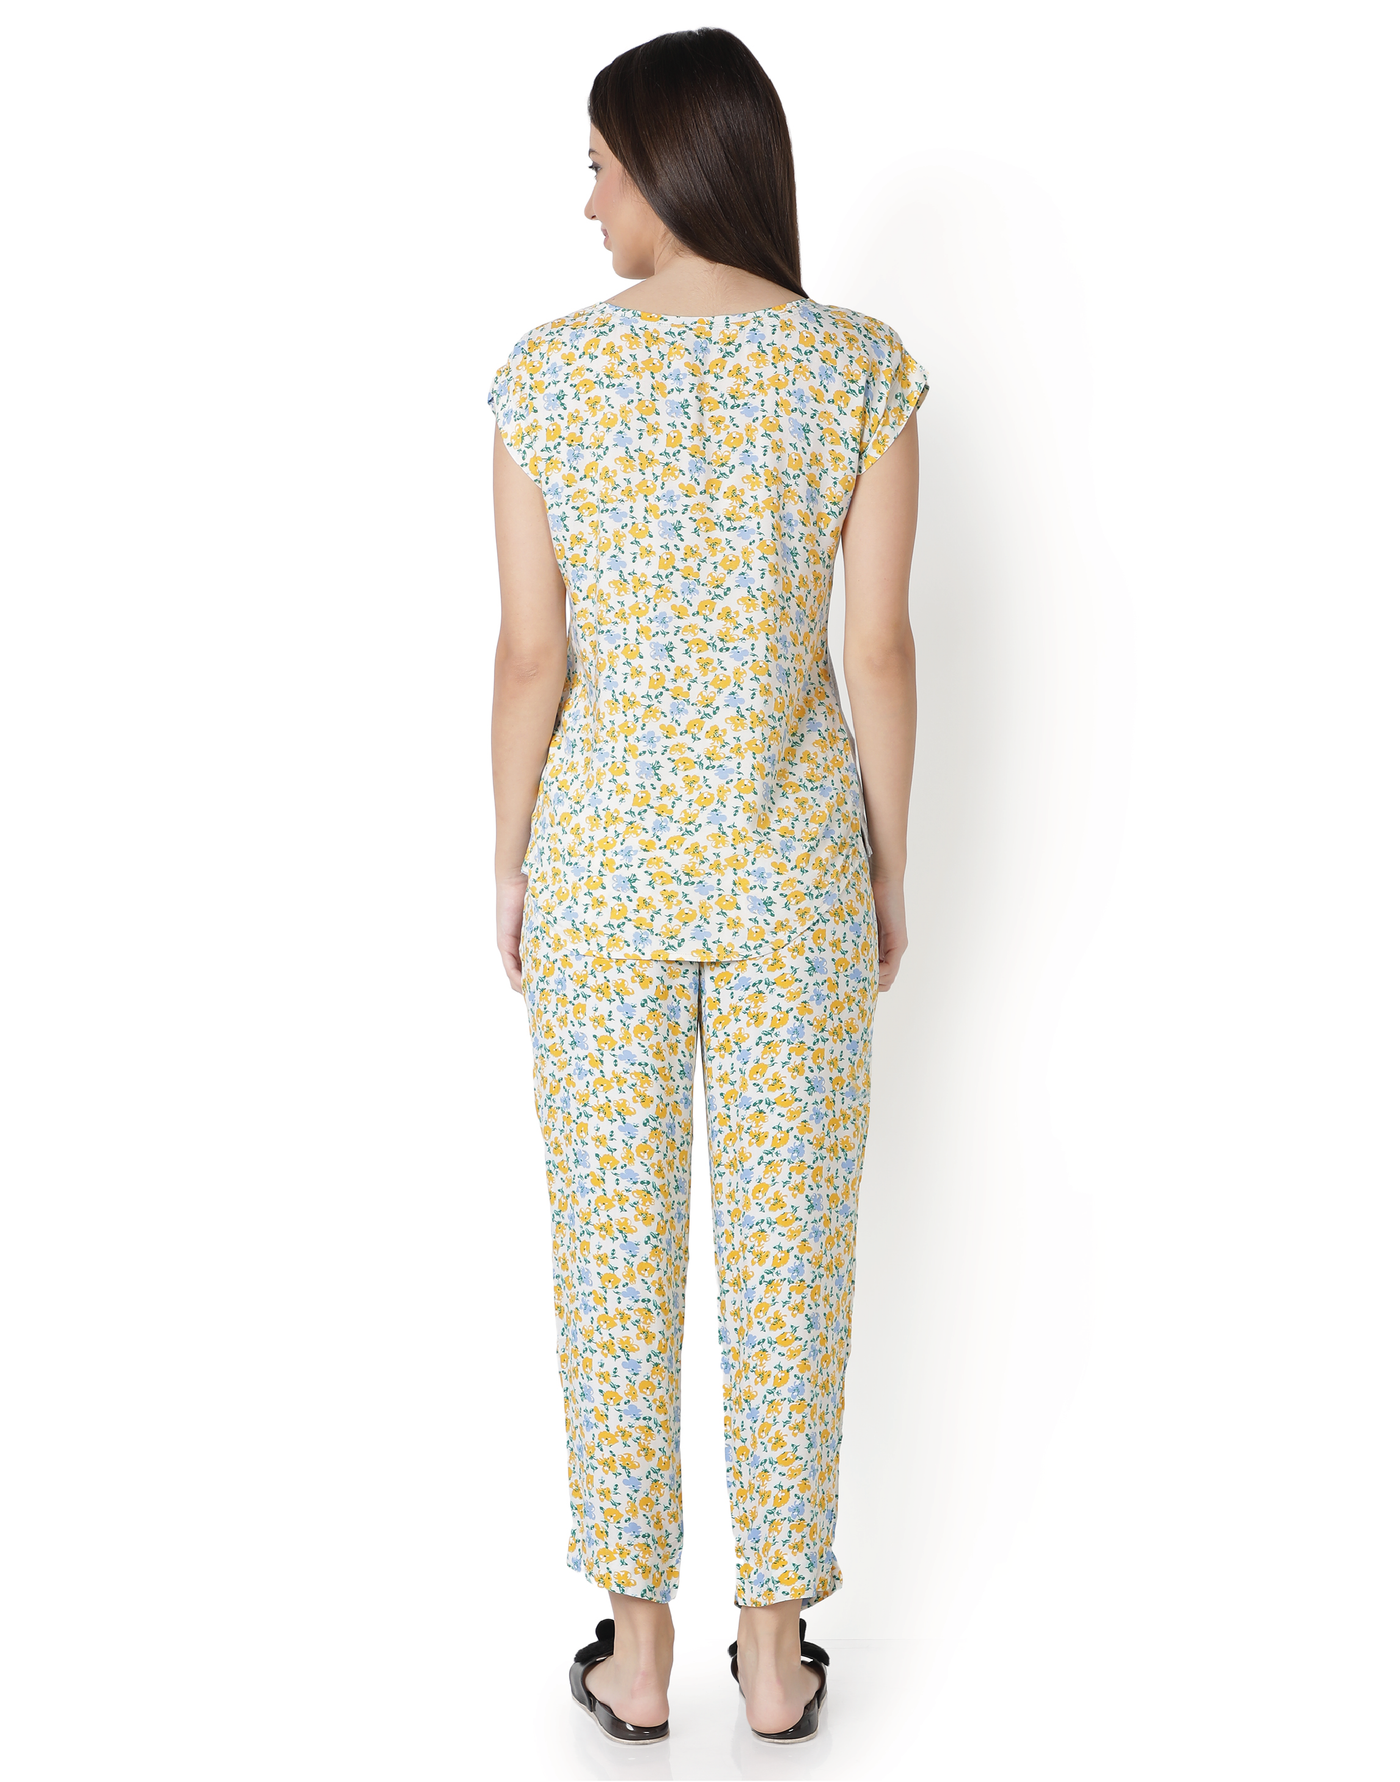 Pyjama Set for Women-Floral Print